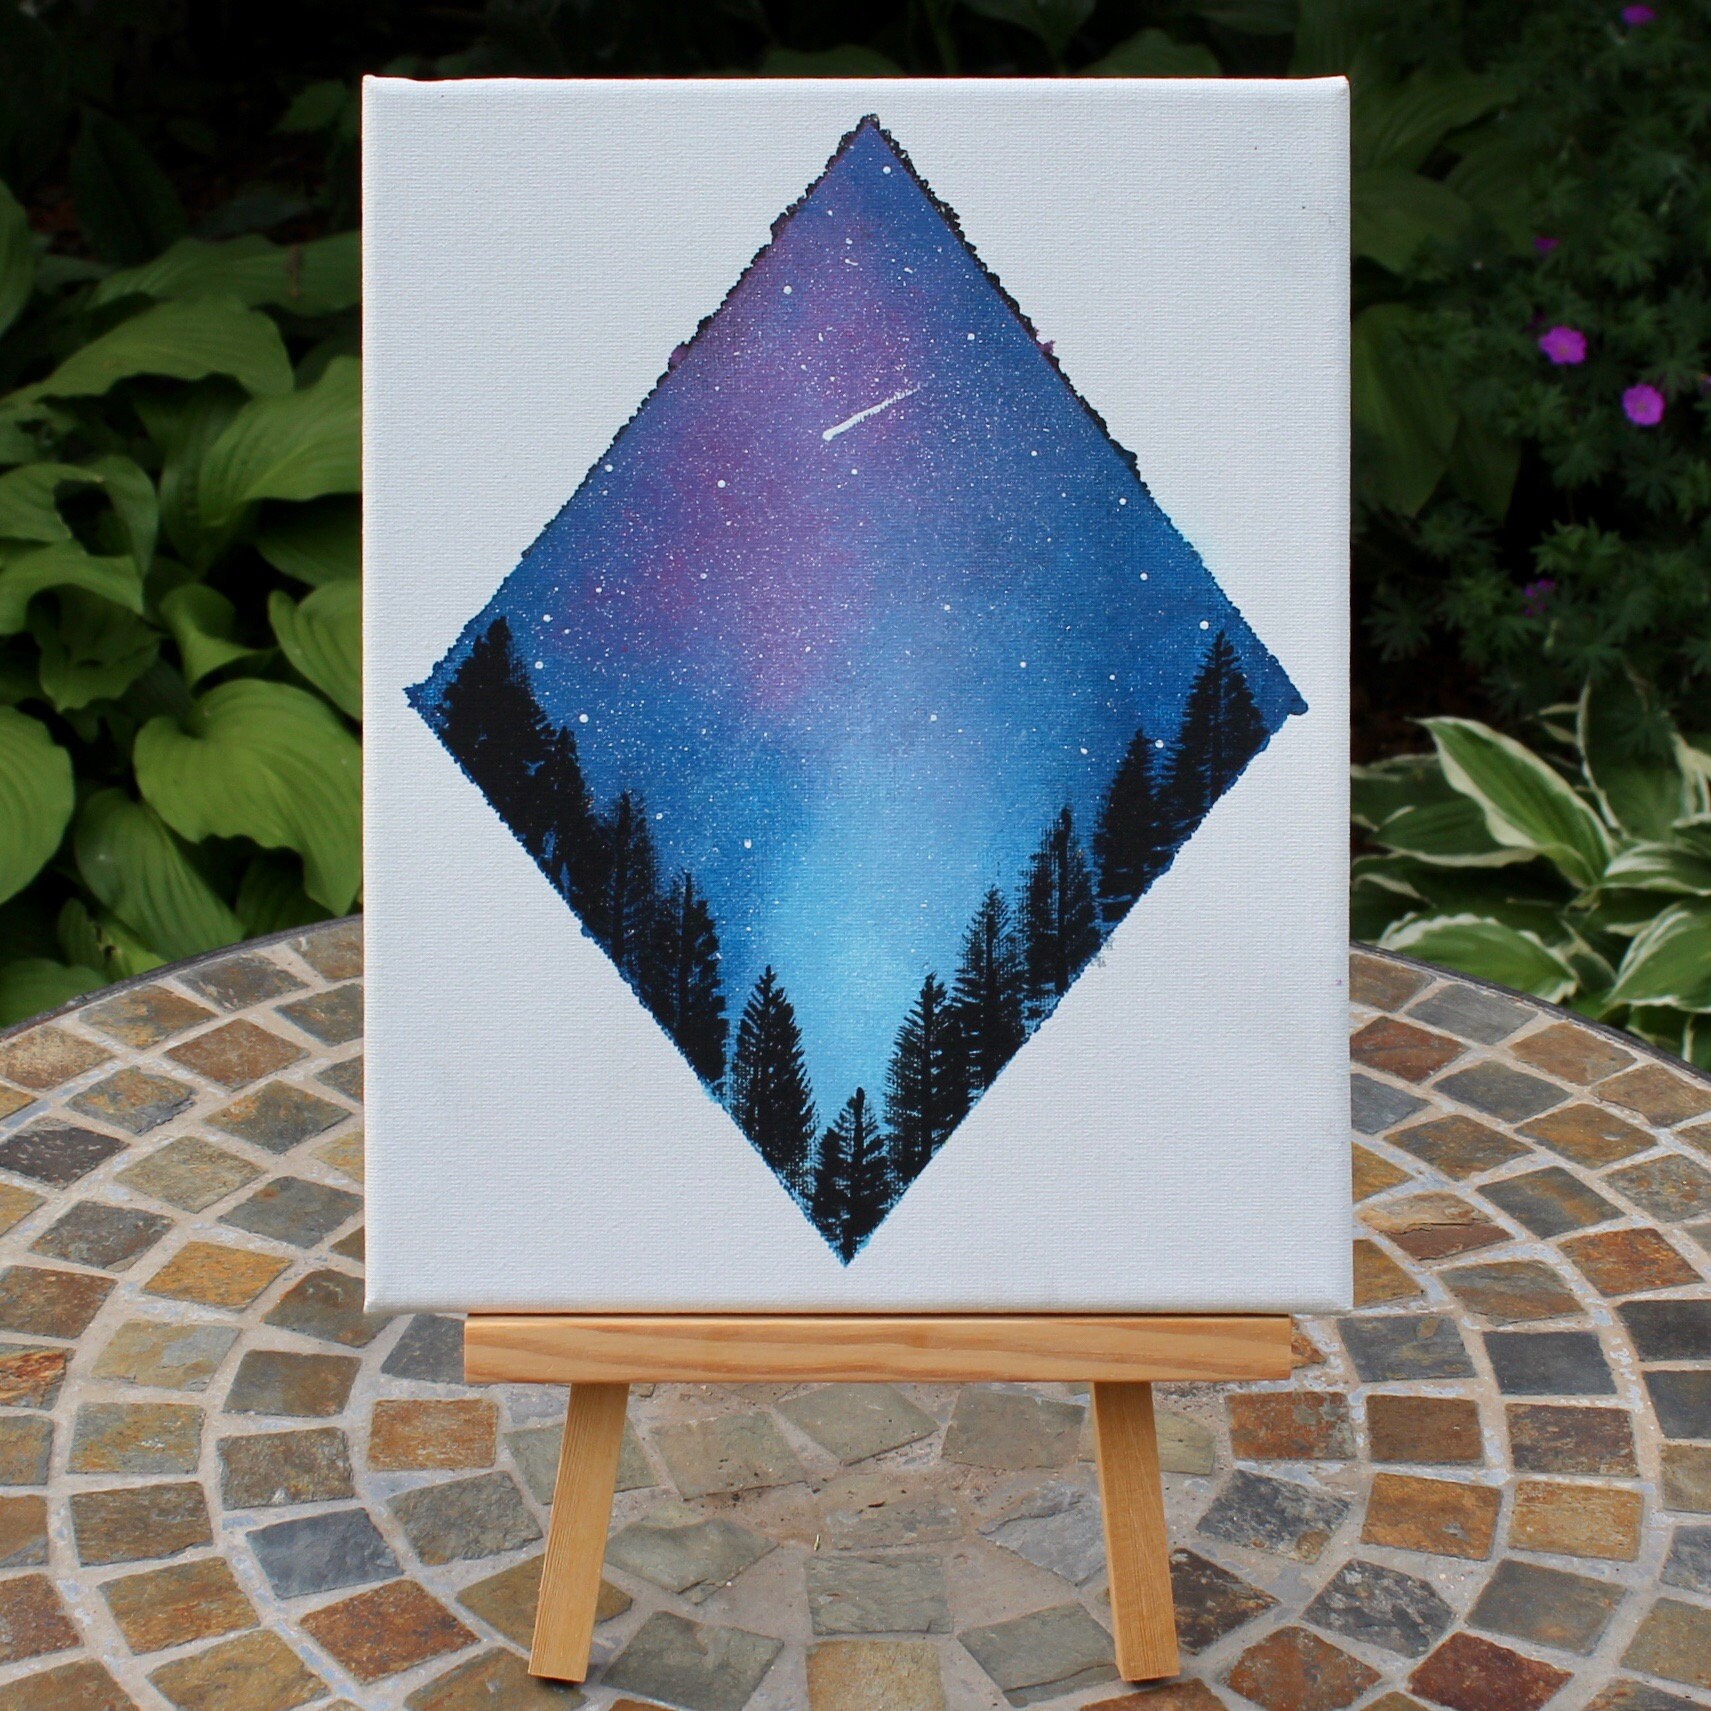 8x8 Canvas Starry Galaxy Night Sky Acrylic Painting on Canvas